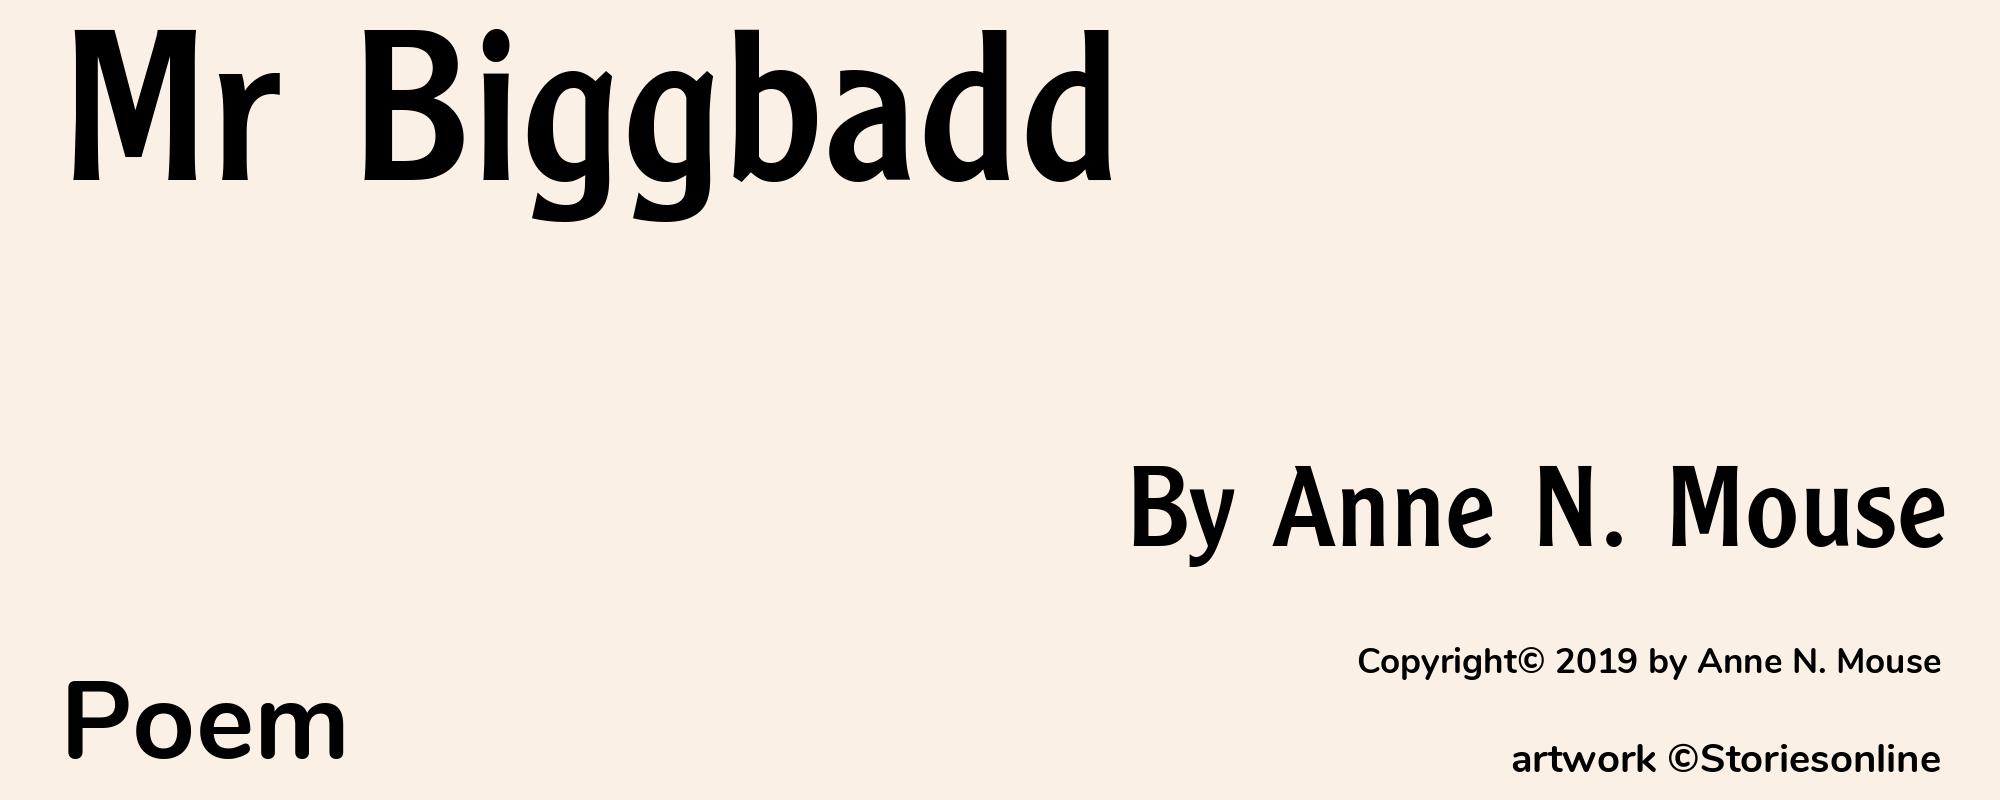 Mr Biggbadd - Cover